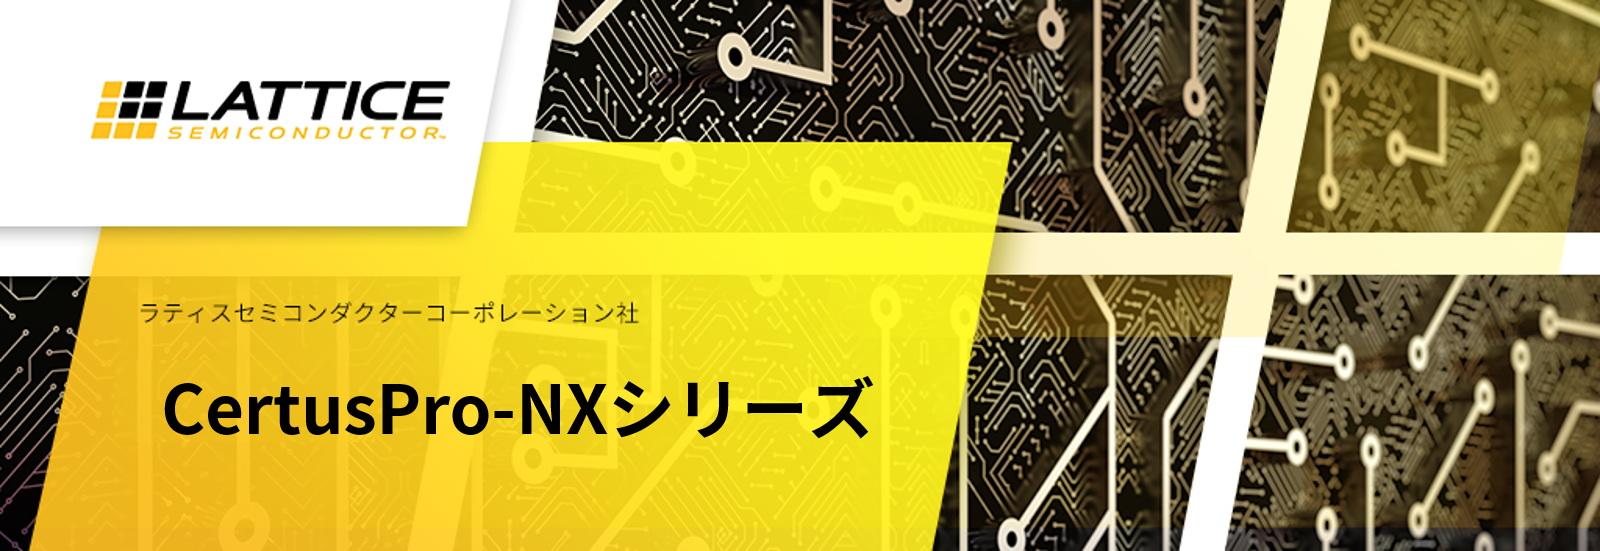 Certus Pro-NX Series